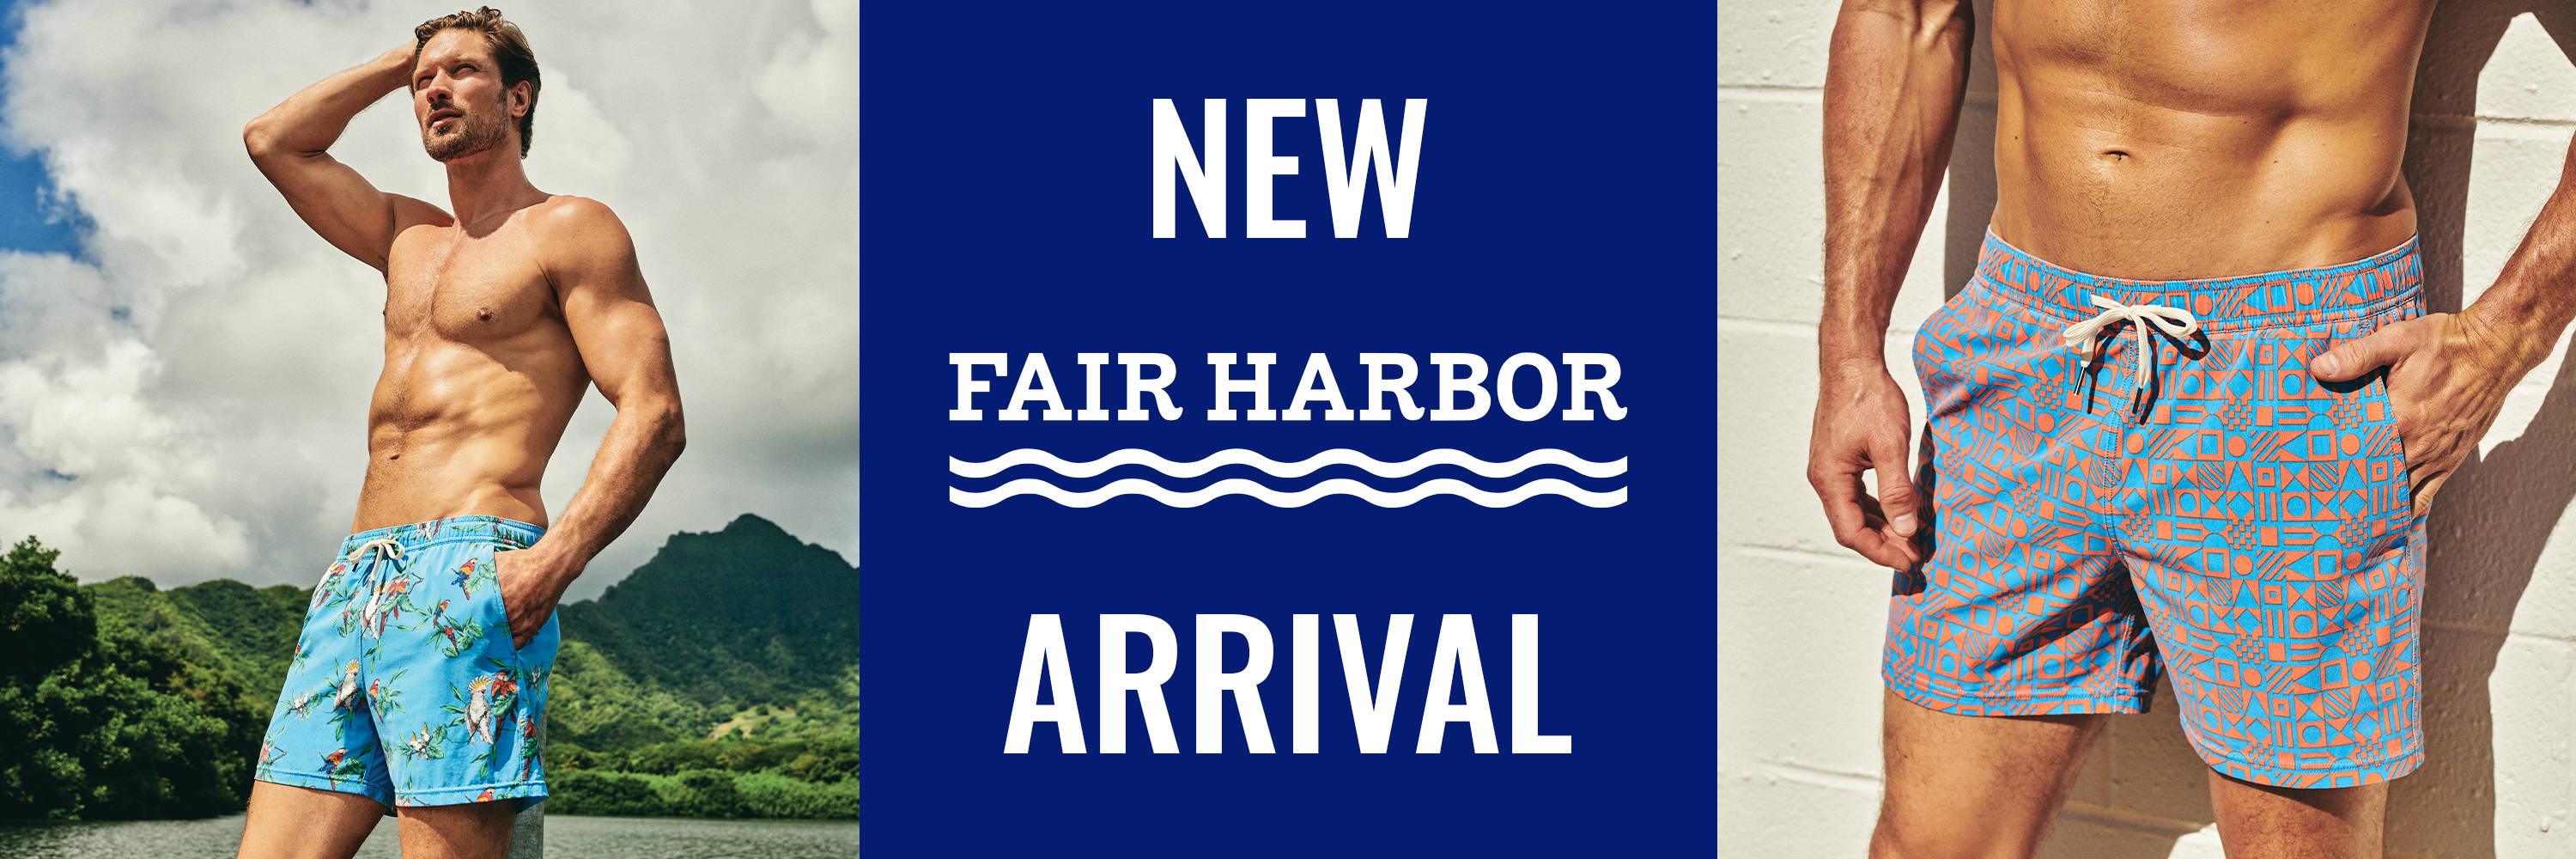 Fair Harbor swimwear logo in center with two men wearing Fair Harbor swim shorts on each side.